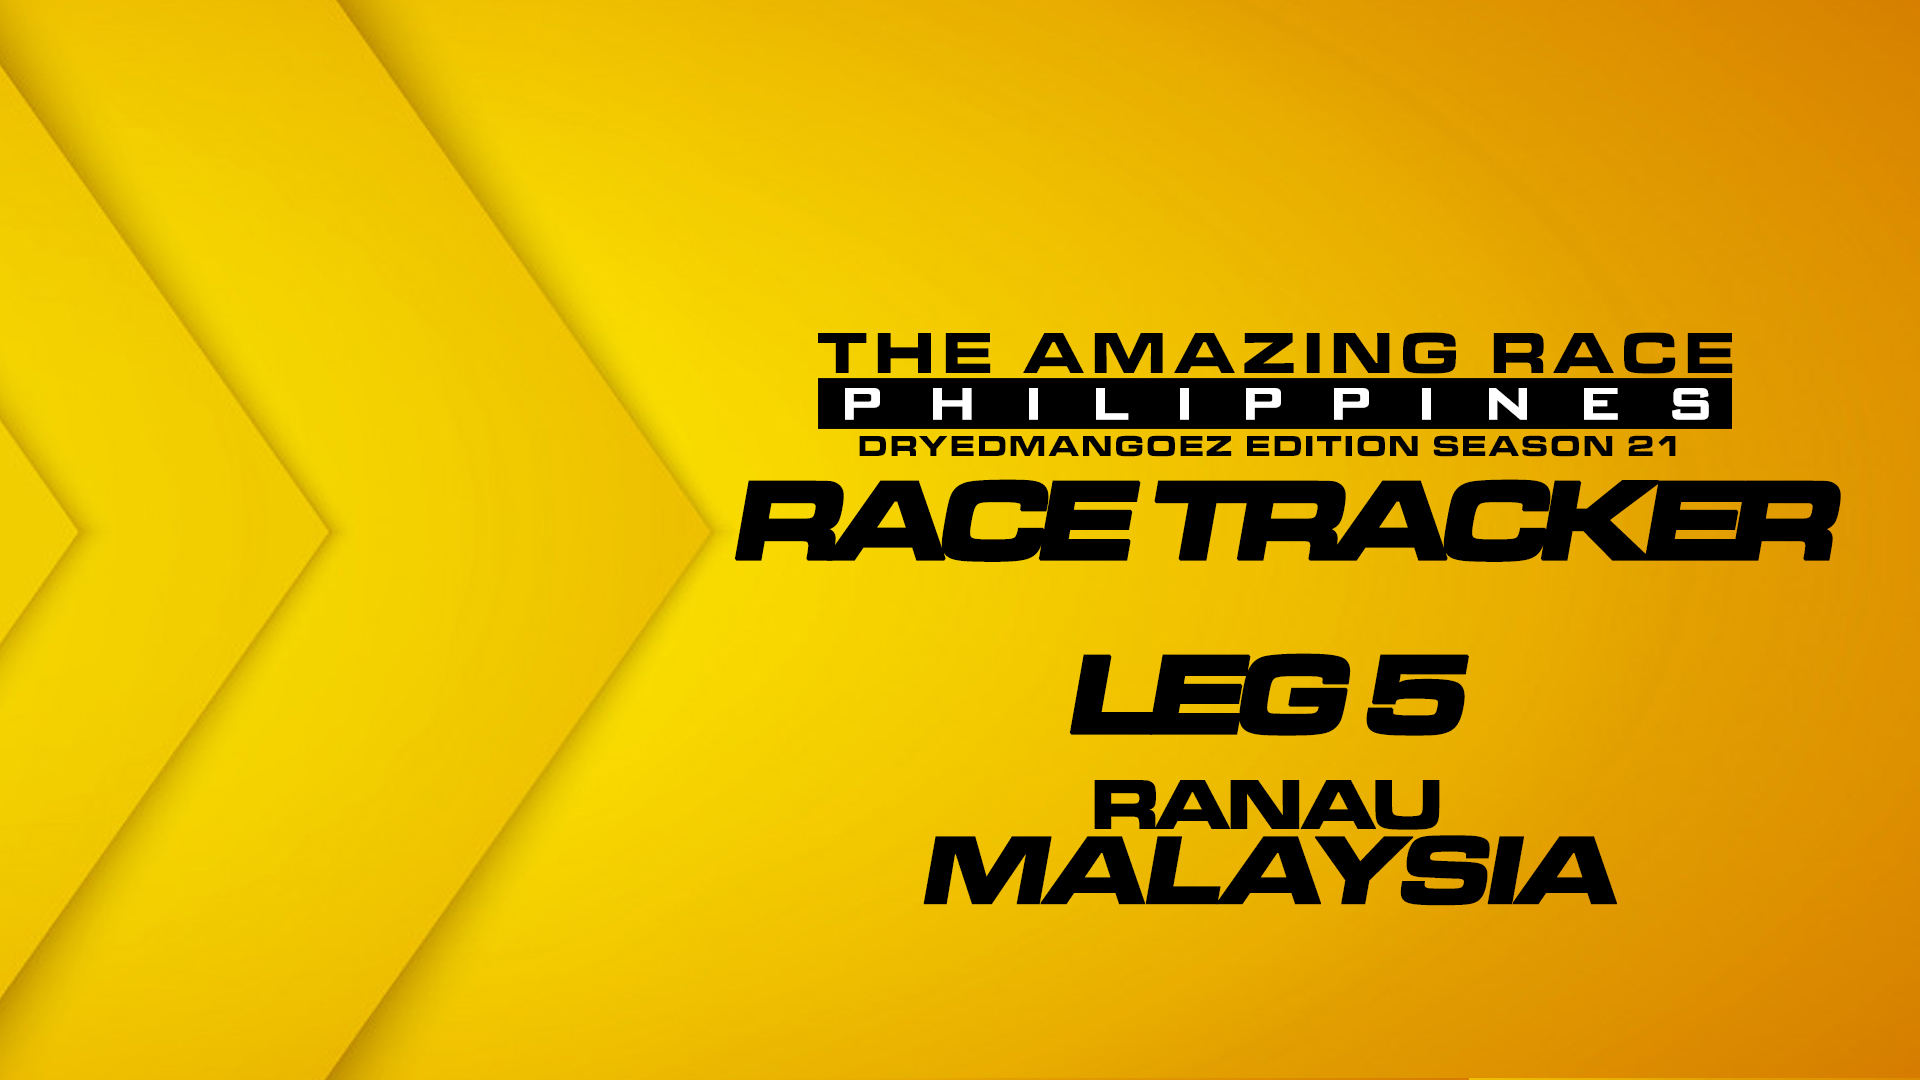 The Amazing Race Philippines: DryedMangoez Edition Season 21 Race Tracker – Leg 5